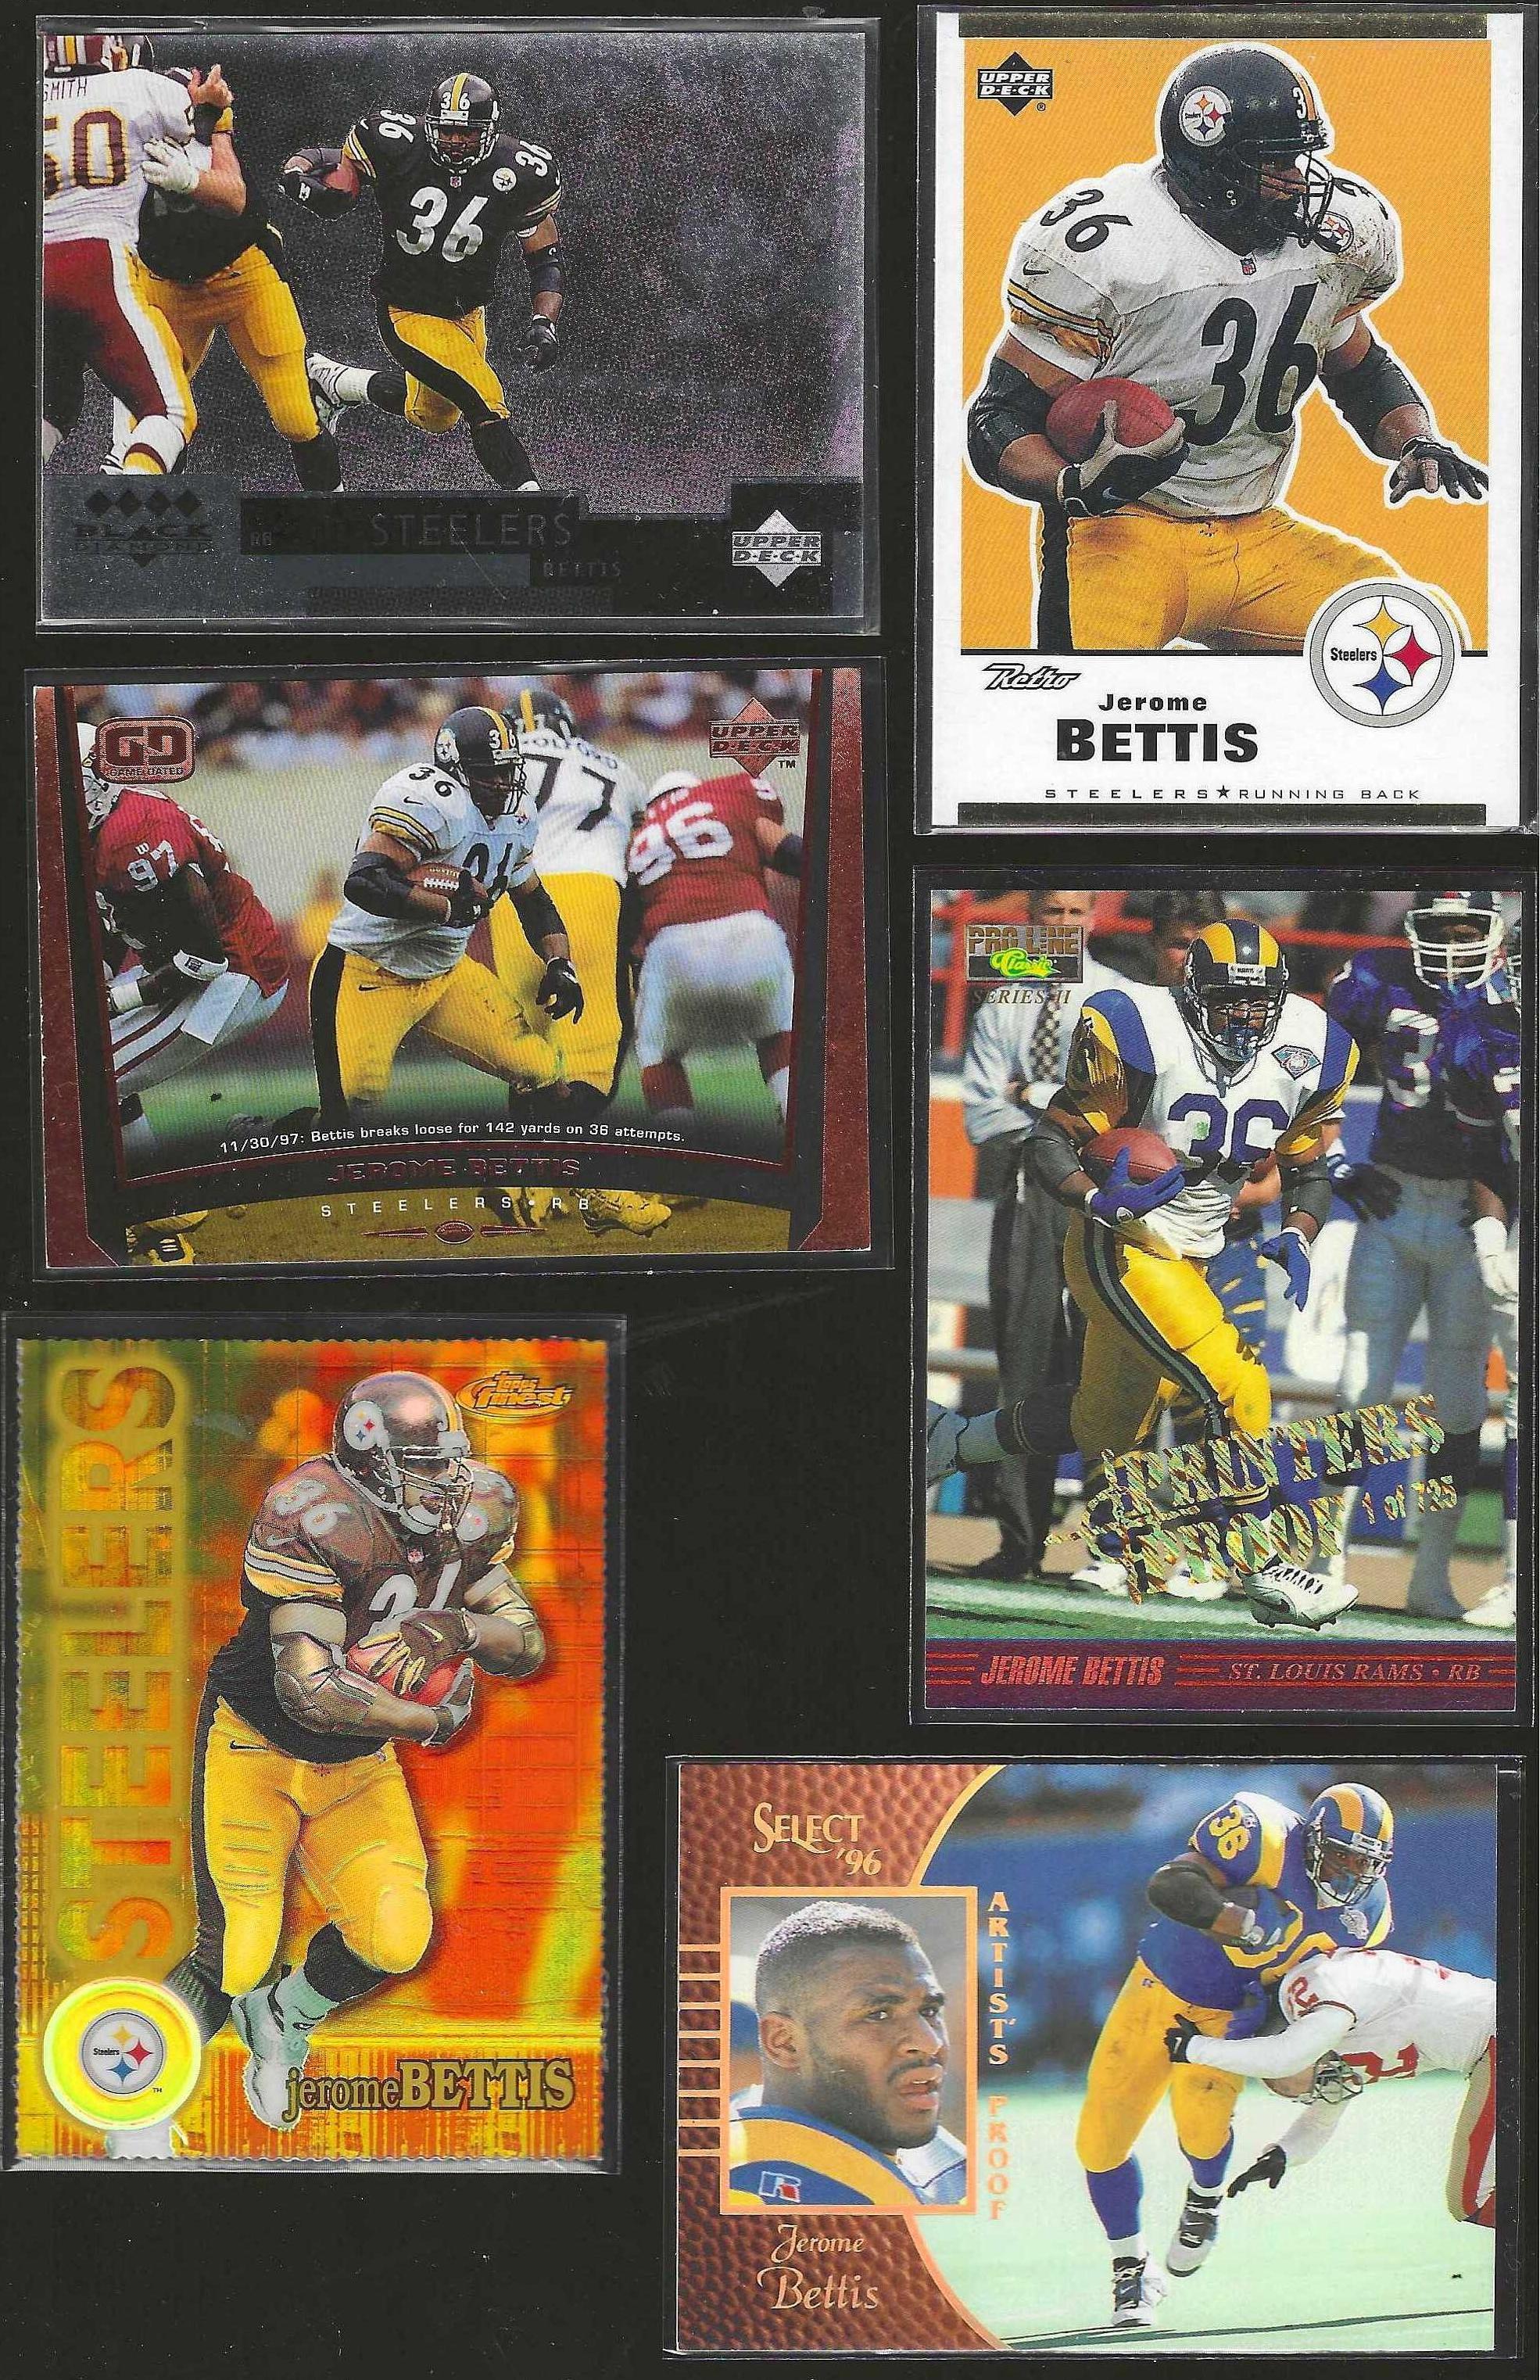 Jerome Bettis - 1998 Upper Deck #196 [#/100] (Steelers,HOF) Baseball cards value